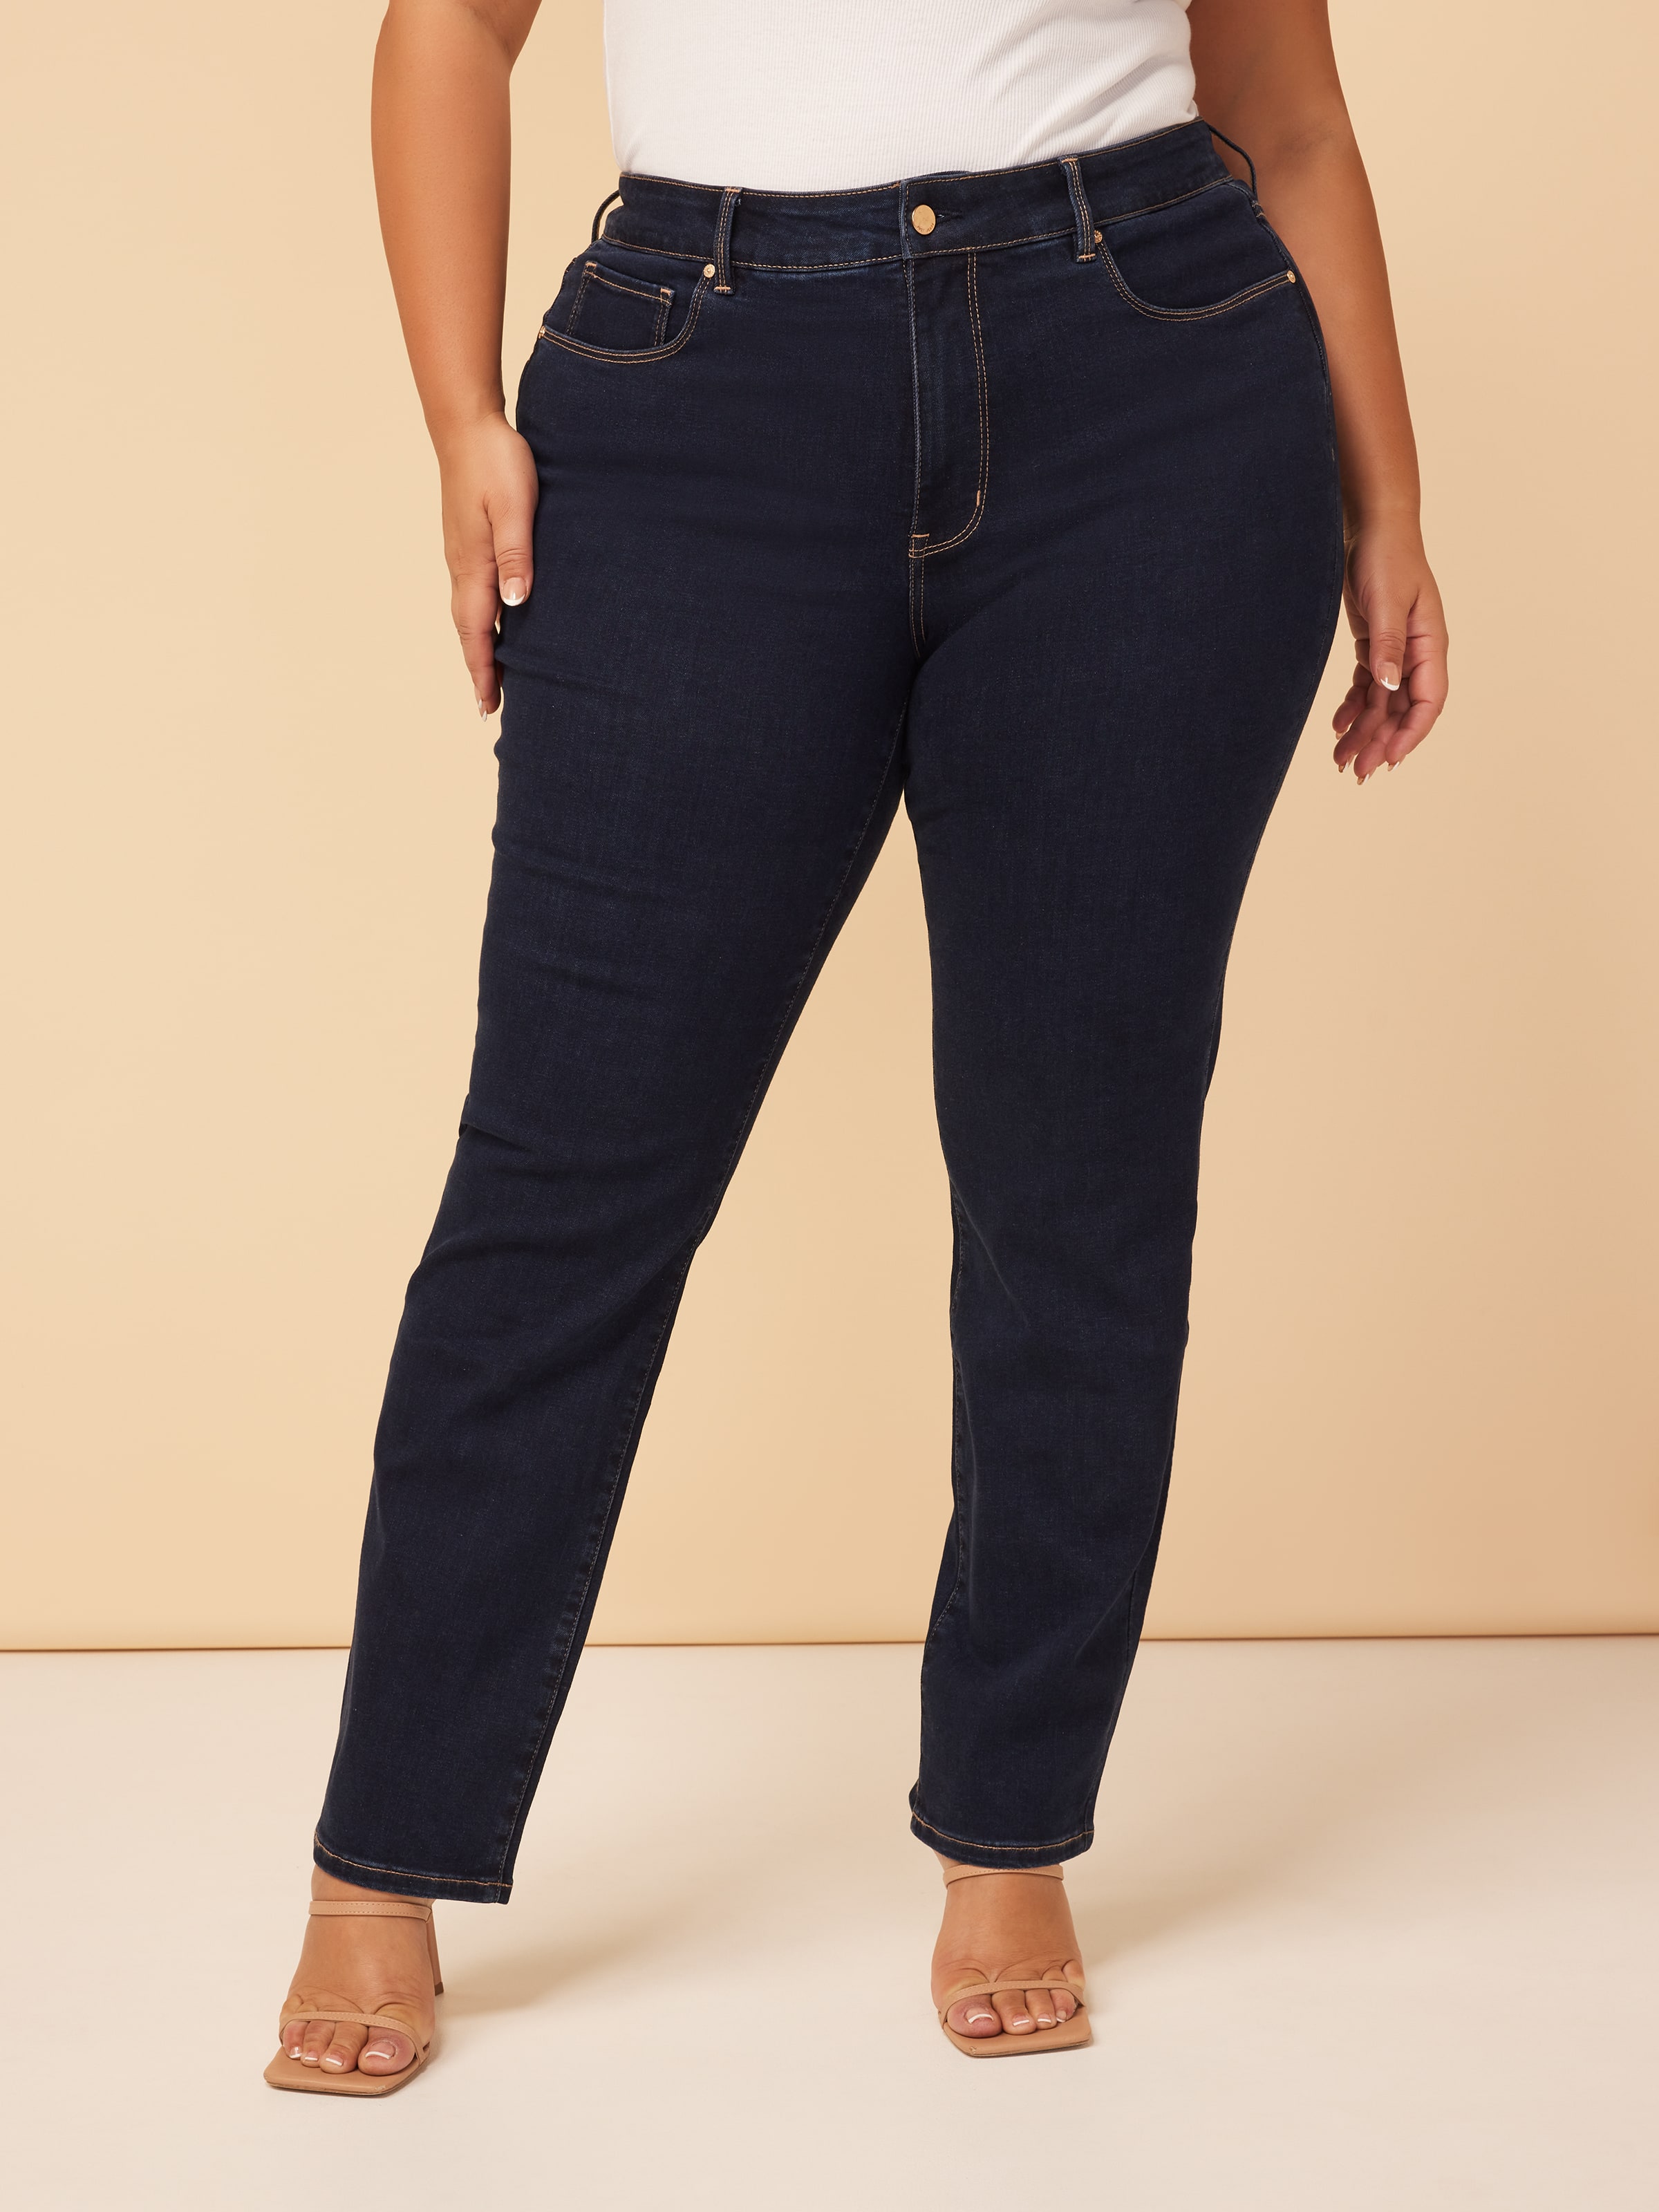 Curve Reformed High Rise Slim Jean - Just Jeans Online